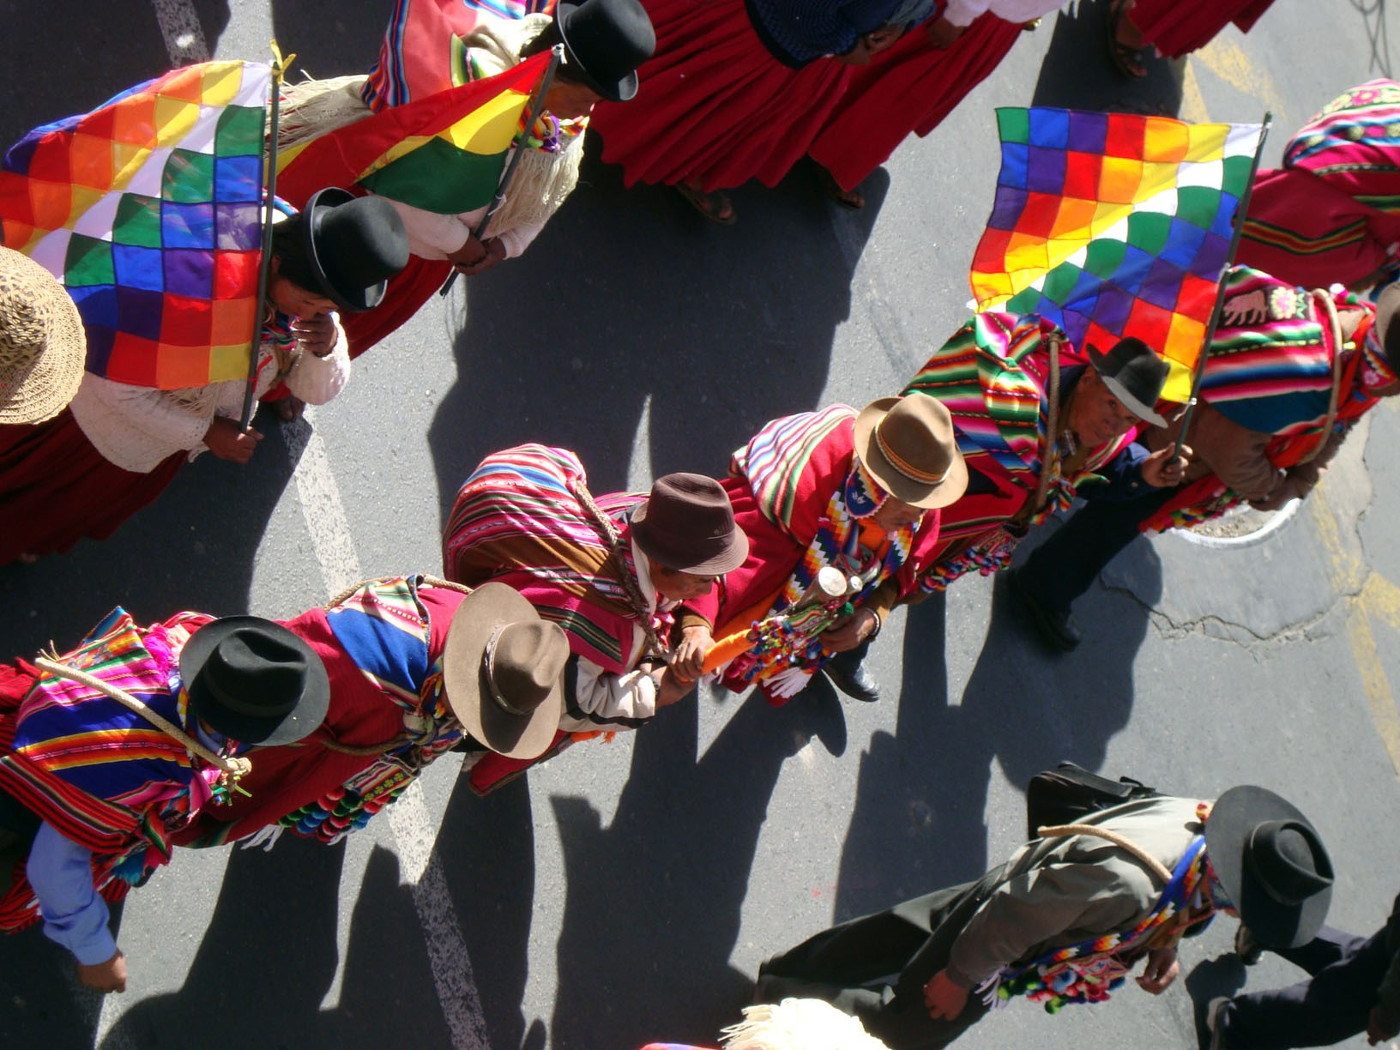 Indigener Protestmarsch durch La Paz. Symbolbild (2008): Whipalas, Ray Edson Hurtado Romero, CC BY 4.0